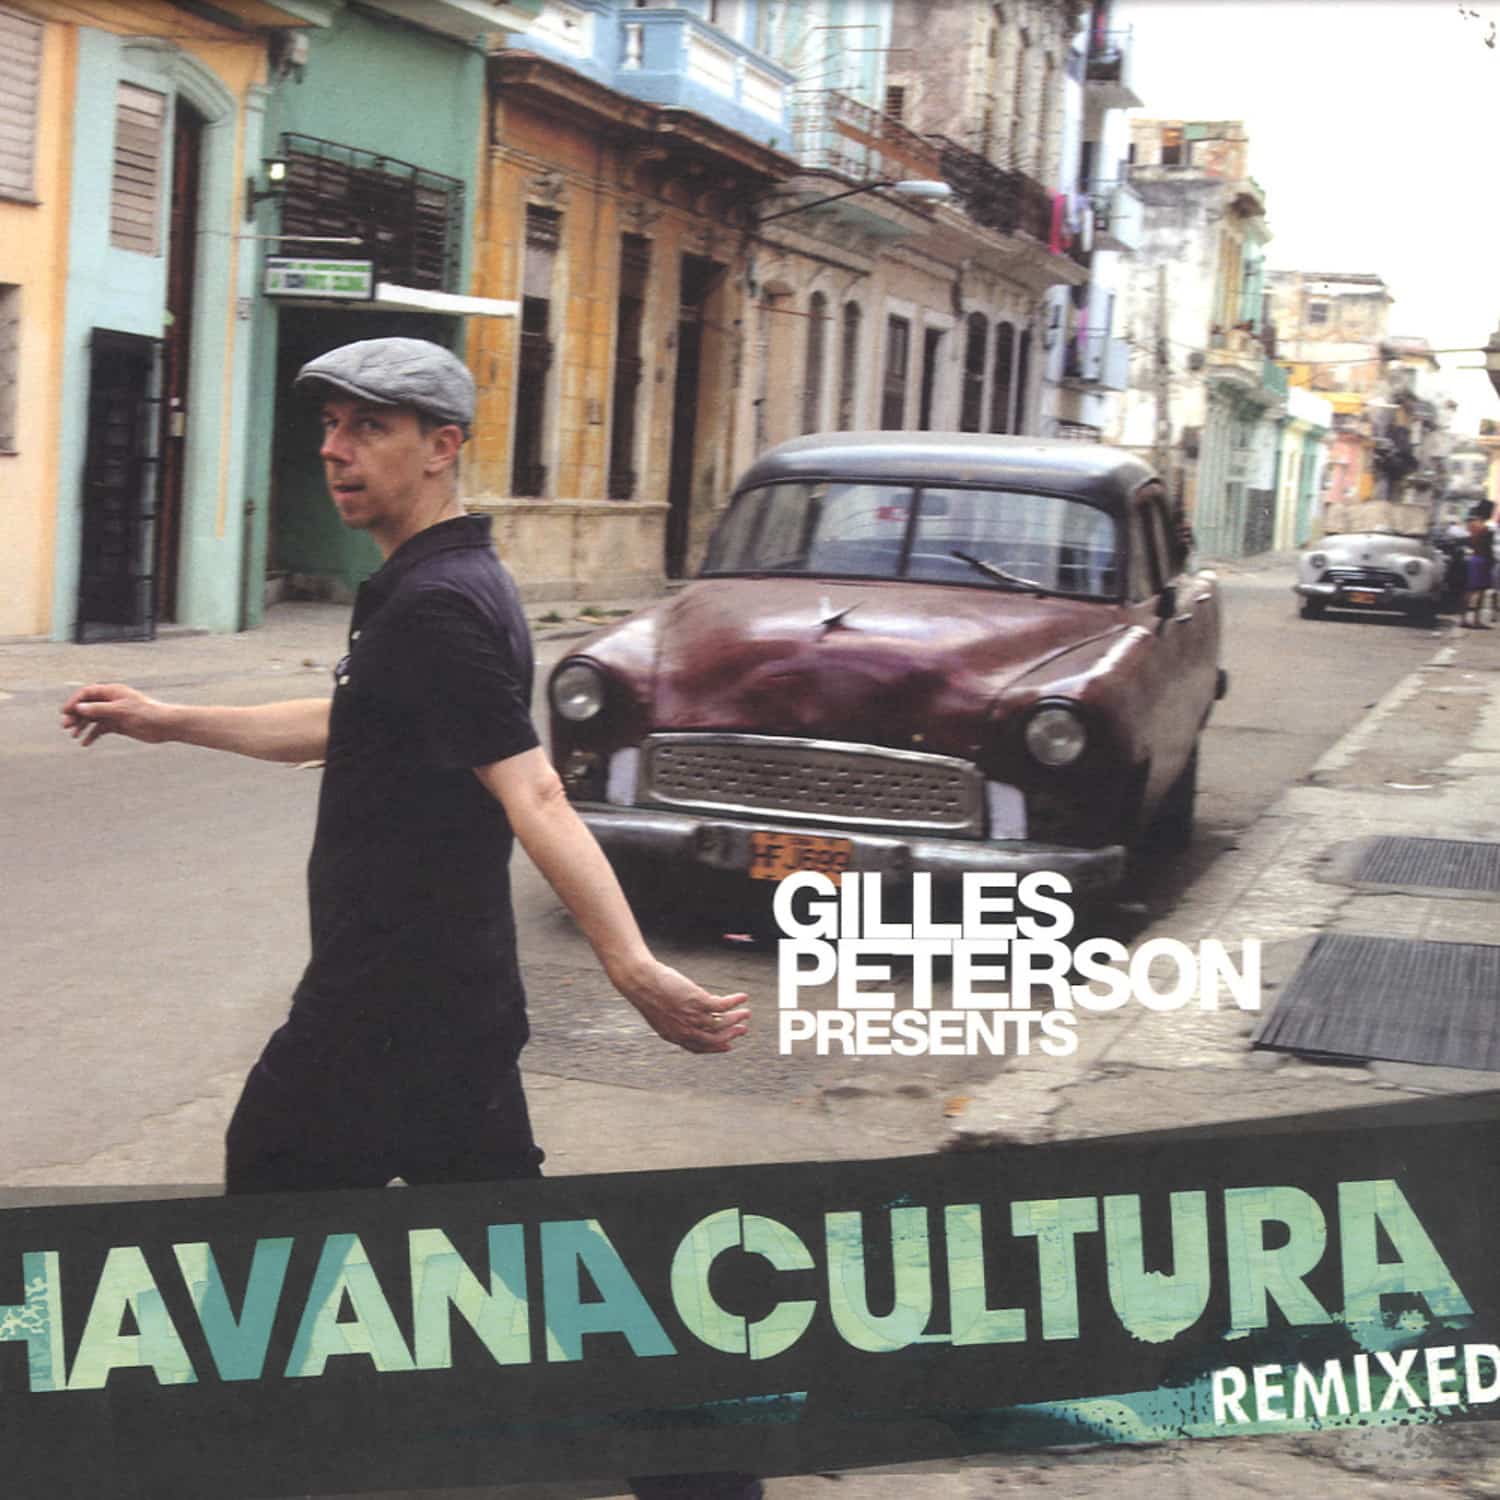 Gilles Peterson - HAVANA CULTURA REMIXED - SAMPLER / MICHAEL CLEIS REMIX 